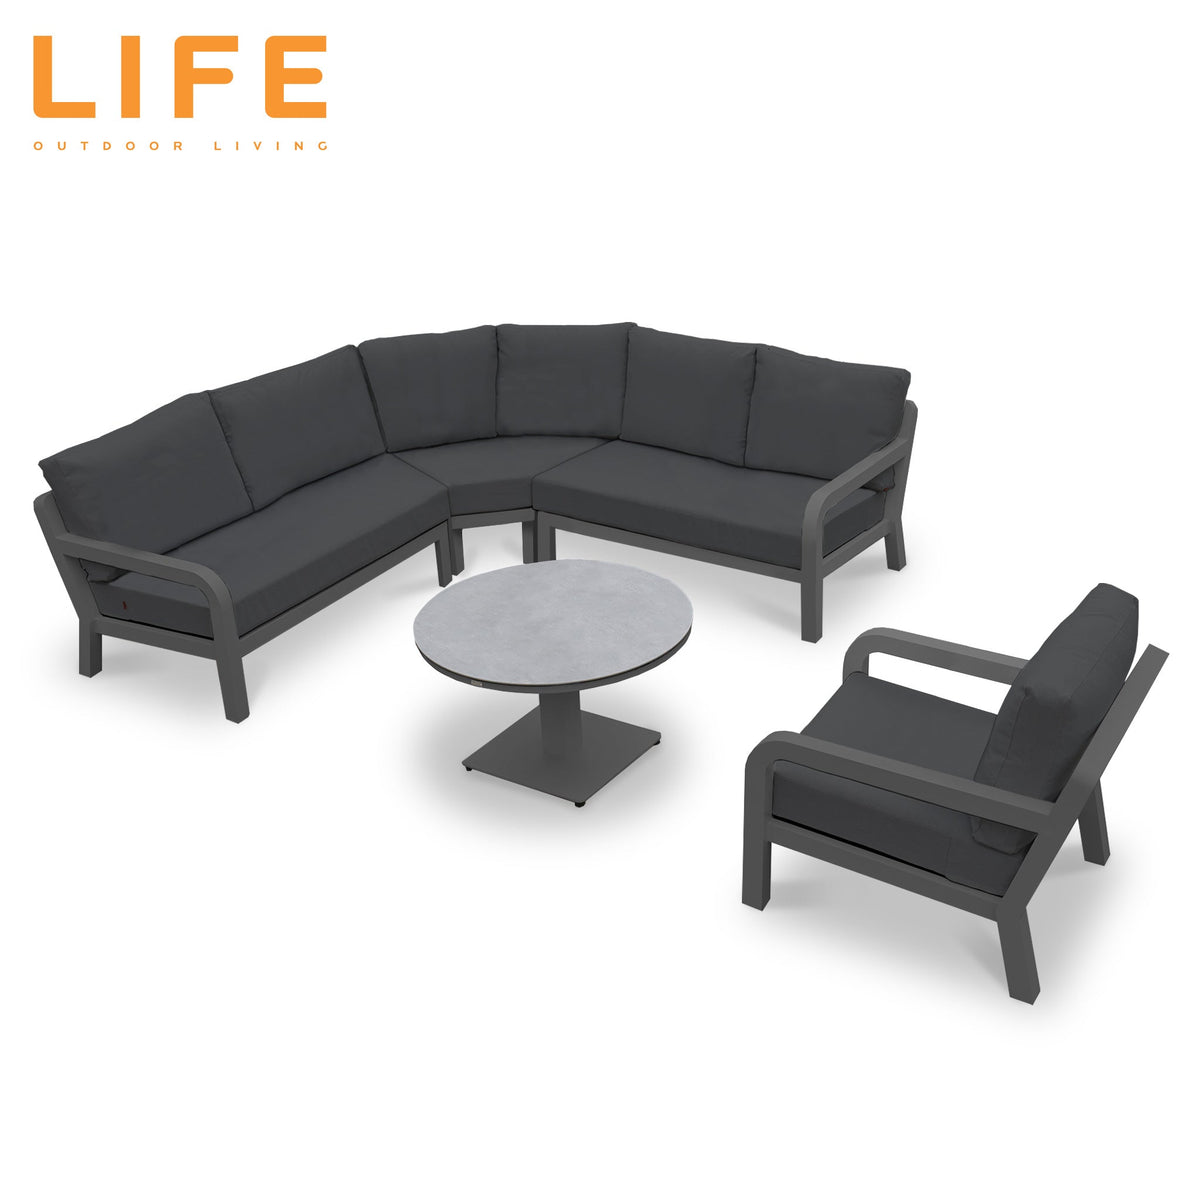 Timber Comfort Corner Sofa Set from Roseland Furniture